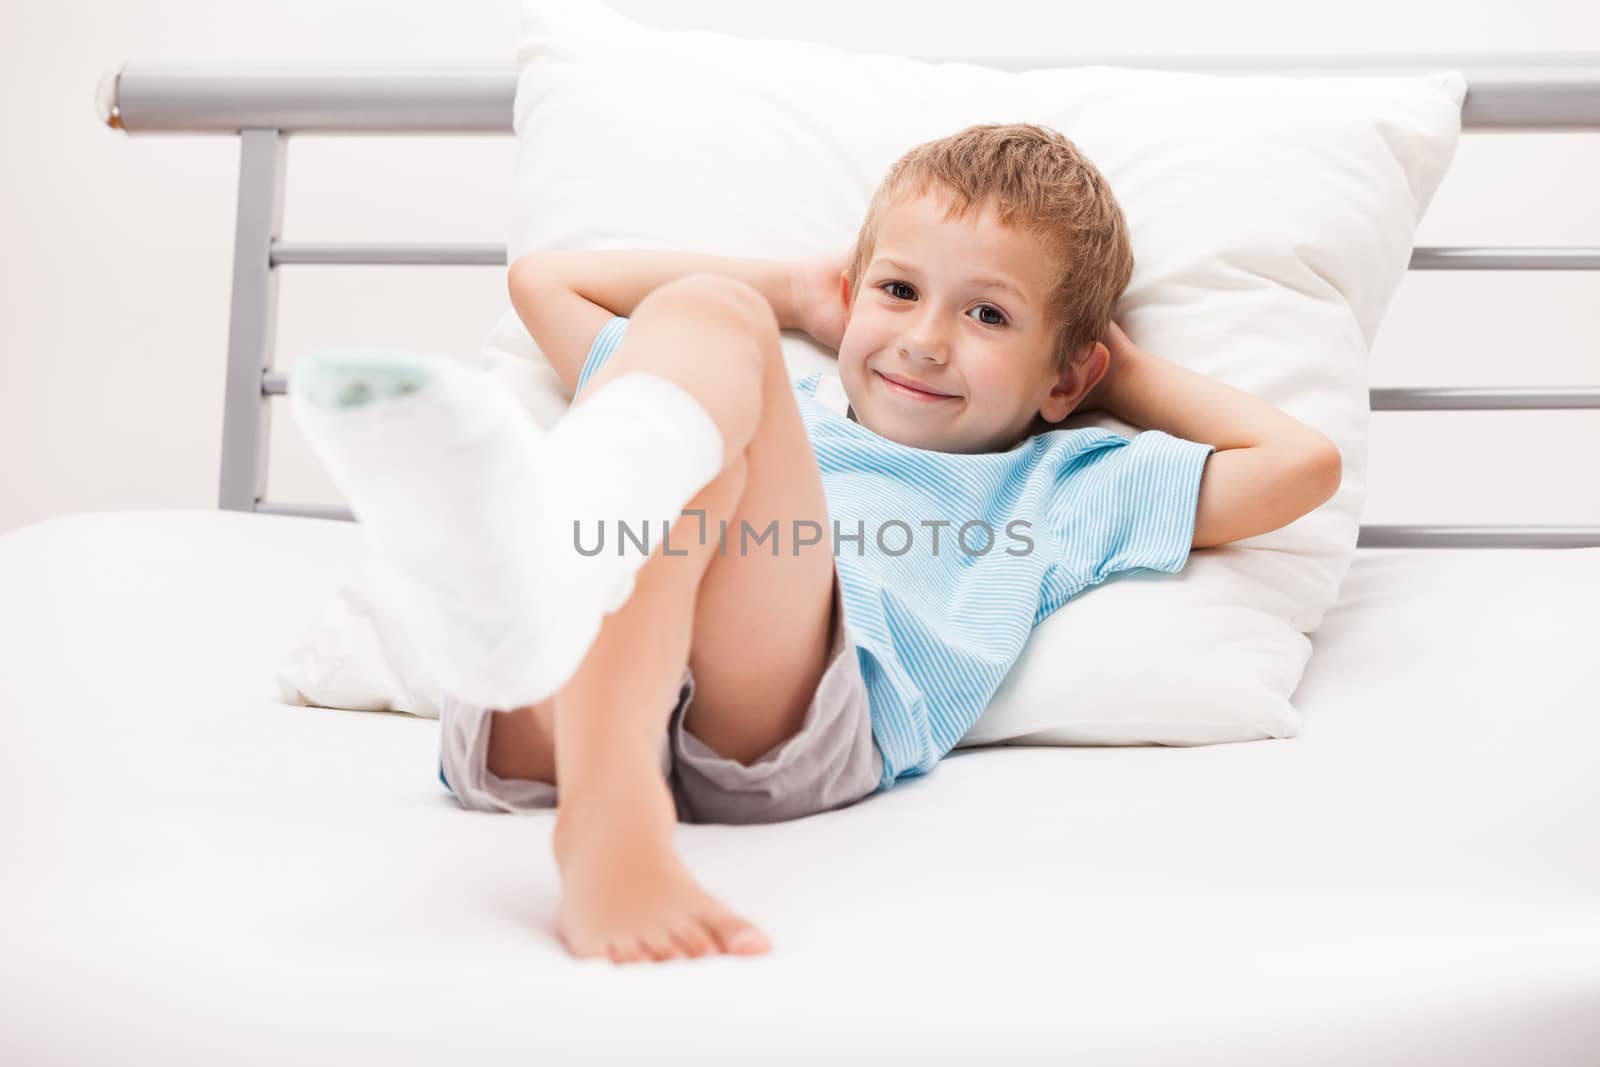 Human healthcare and medicine concept - little child boy with plaster bandage on leg heel fracture or broken foot bone